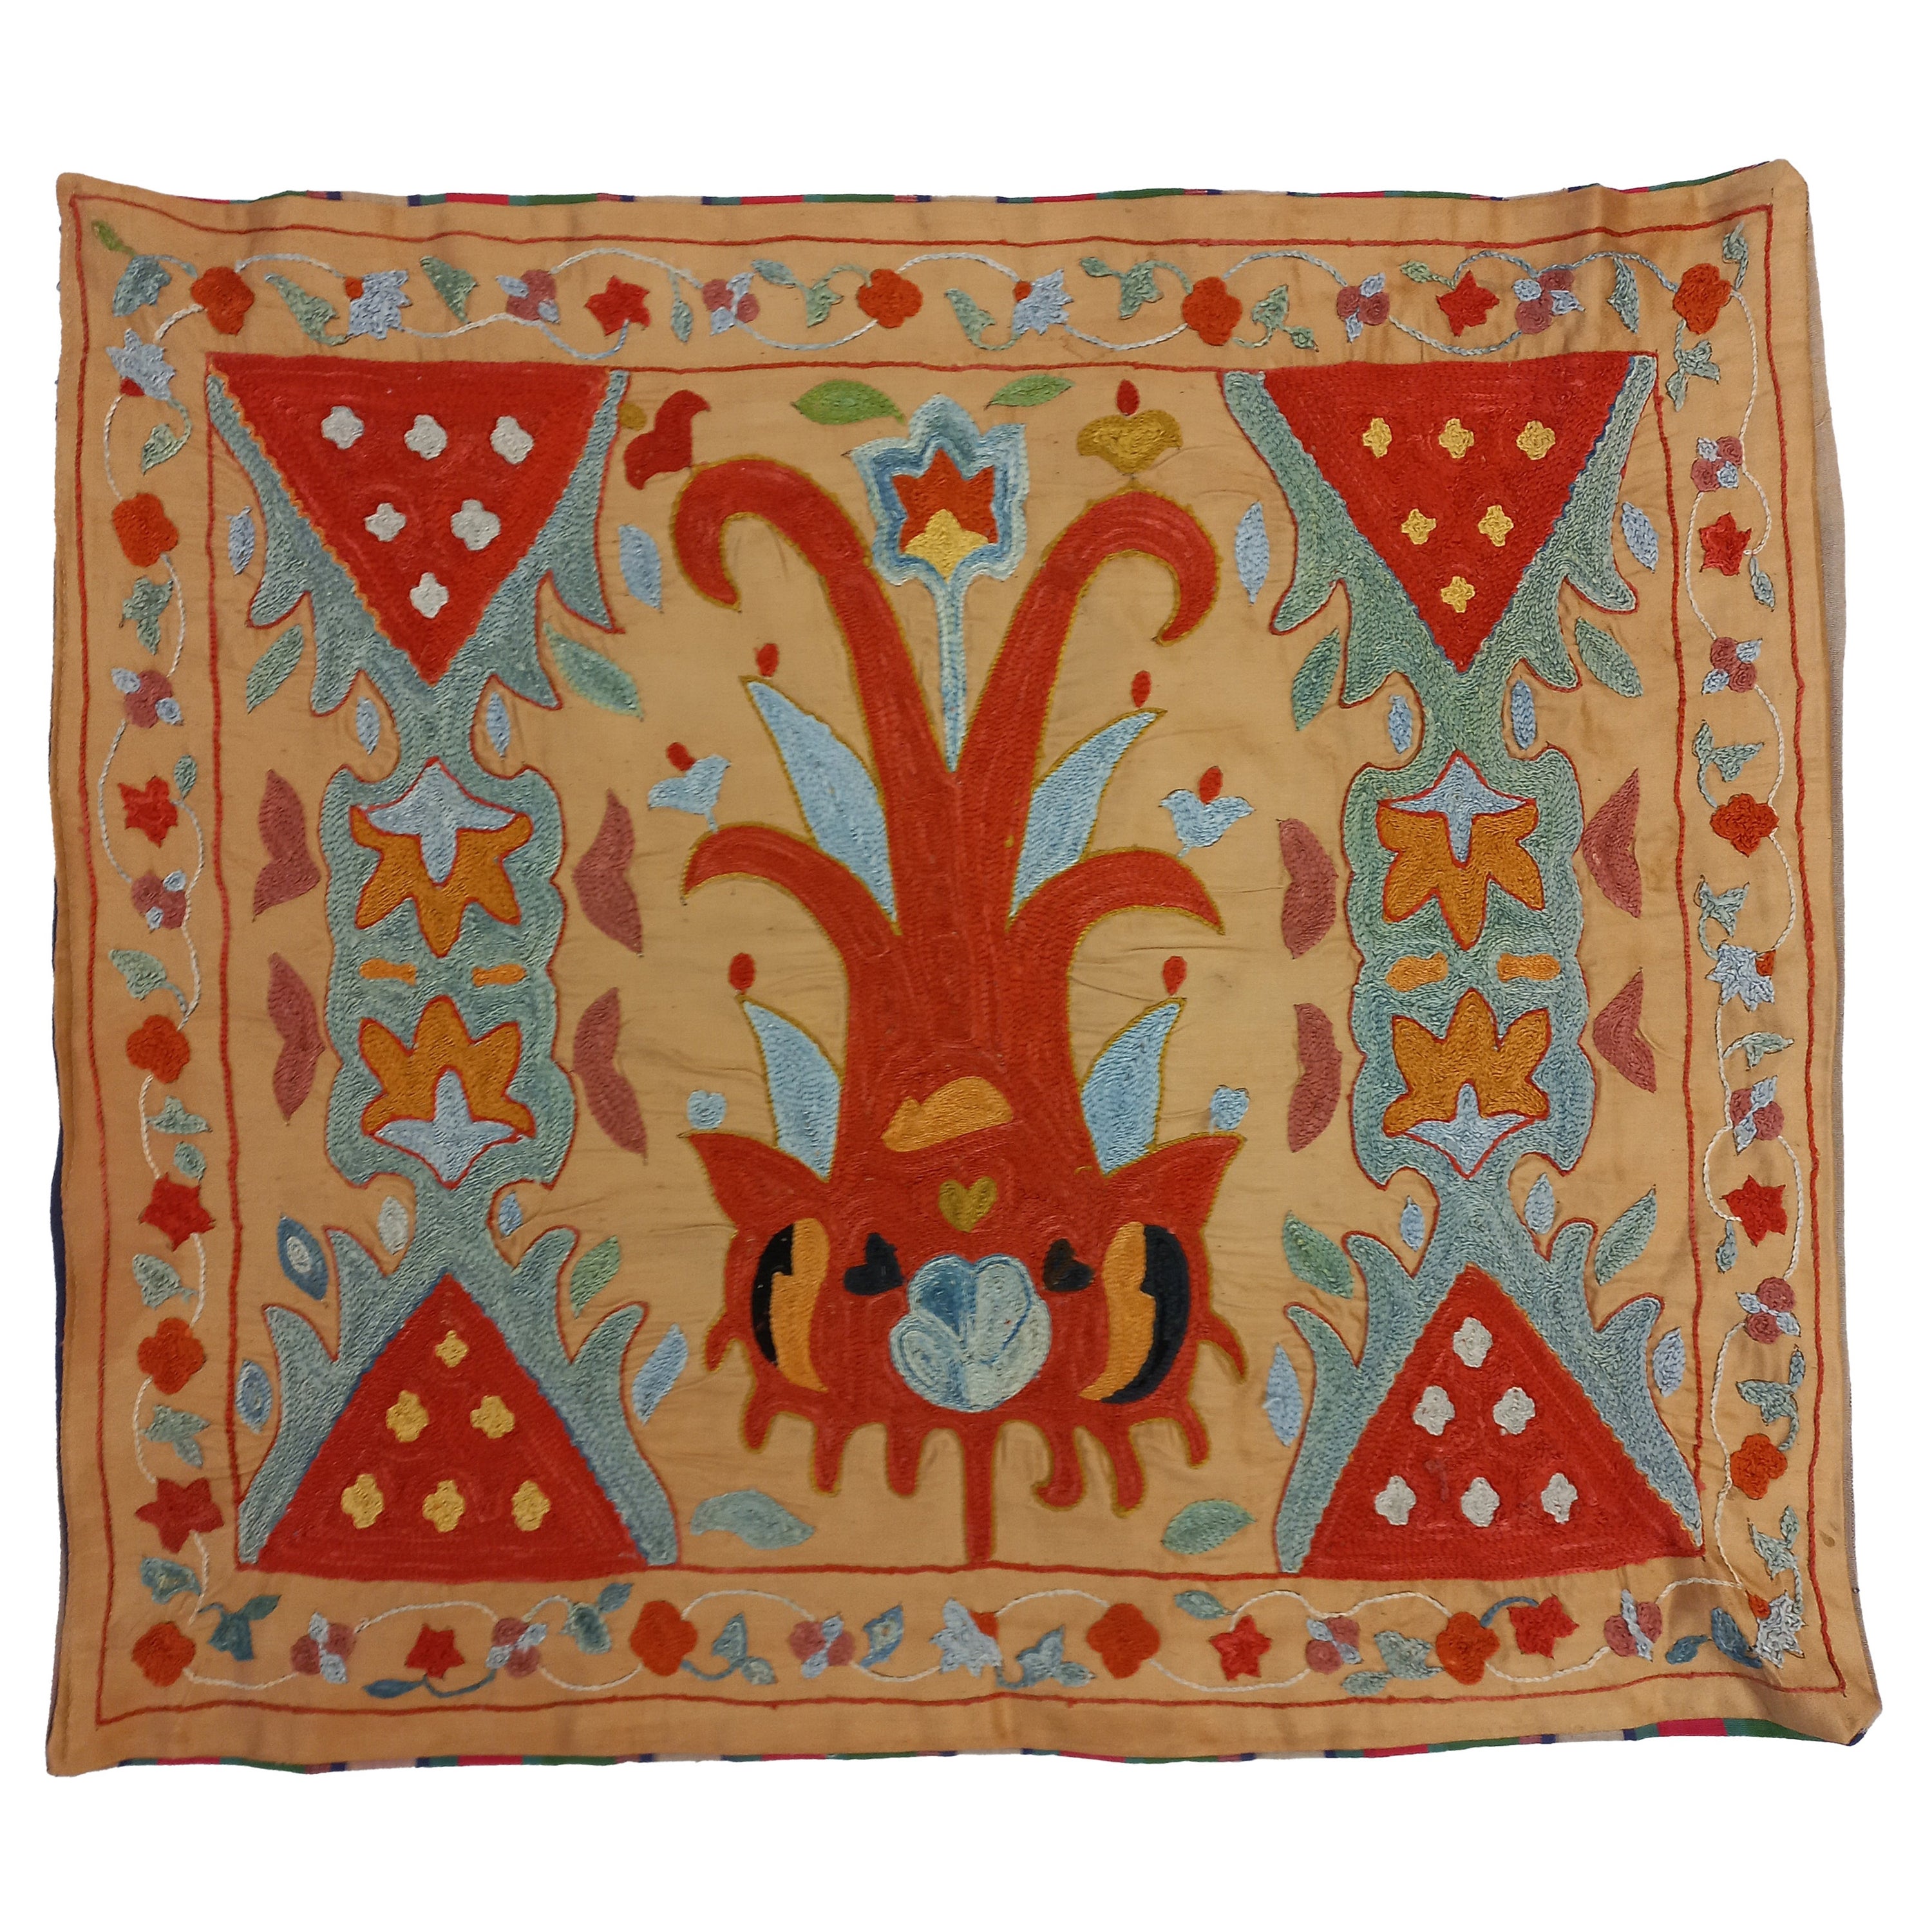 21"x23" Suzani Embroidered Cushion Cover, 100% Silk Pillow, Uzbek Pillow Sham